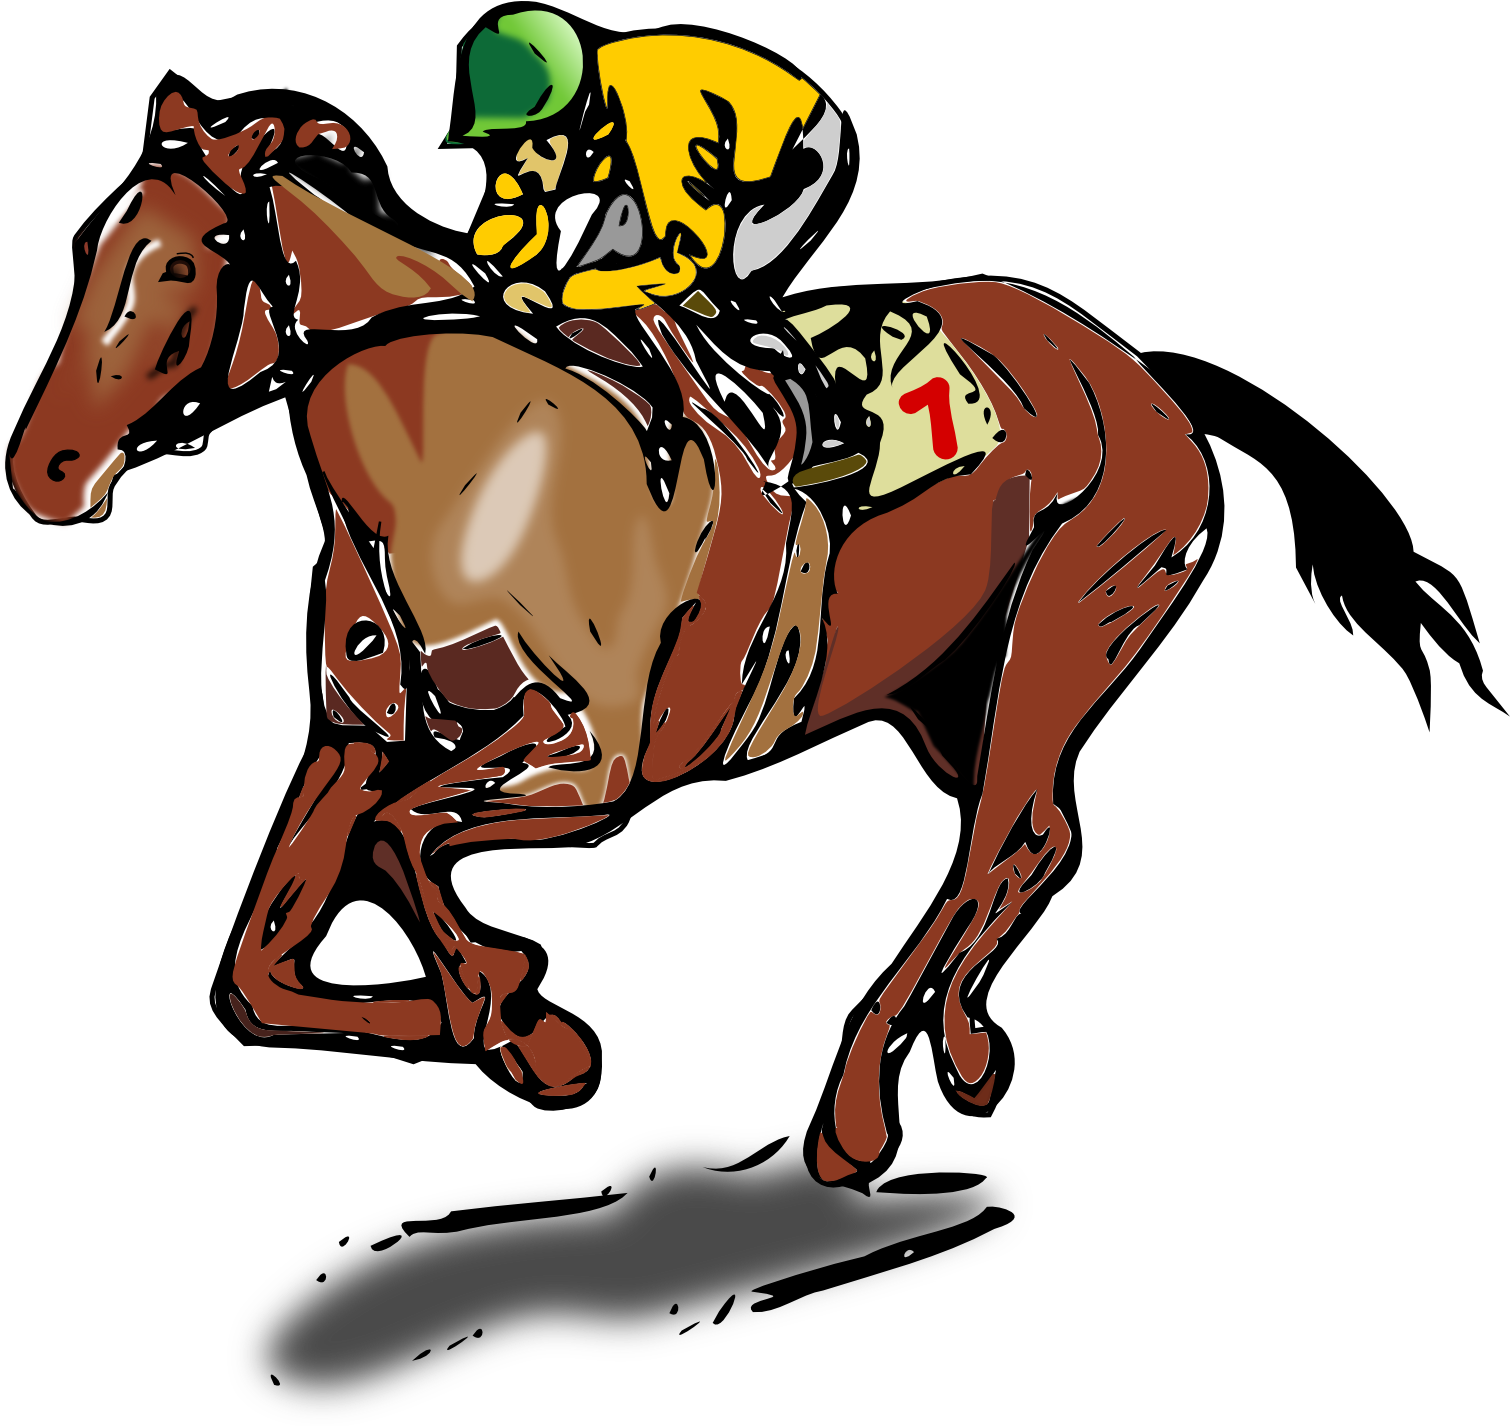 Sports Horse, Jockey, Race, Sports - Race Horse Shower Curtain (694x653)